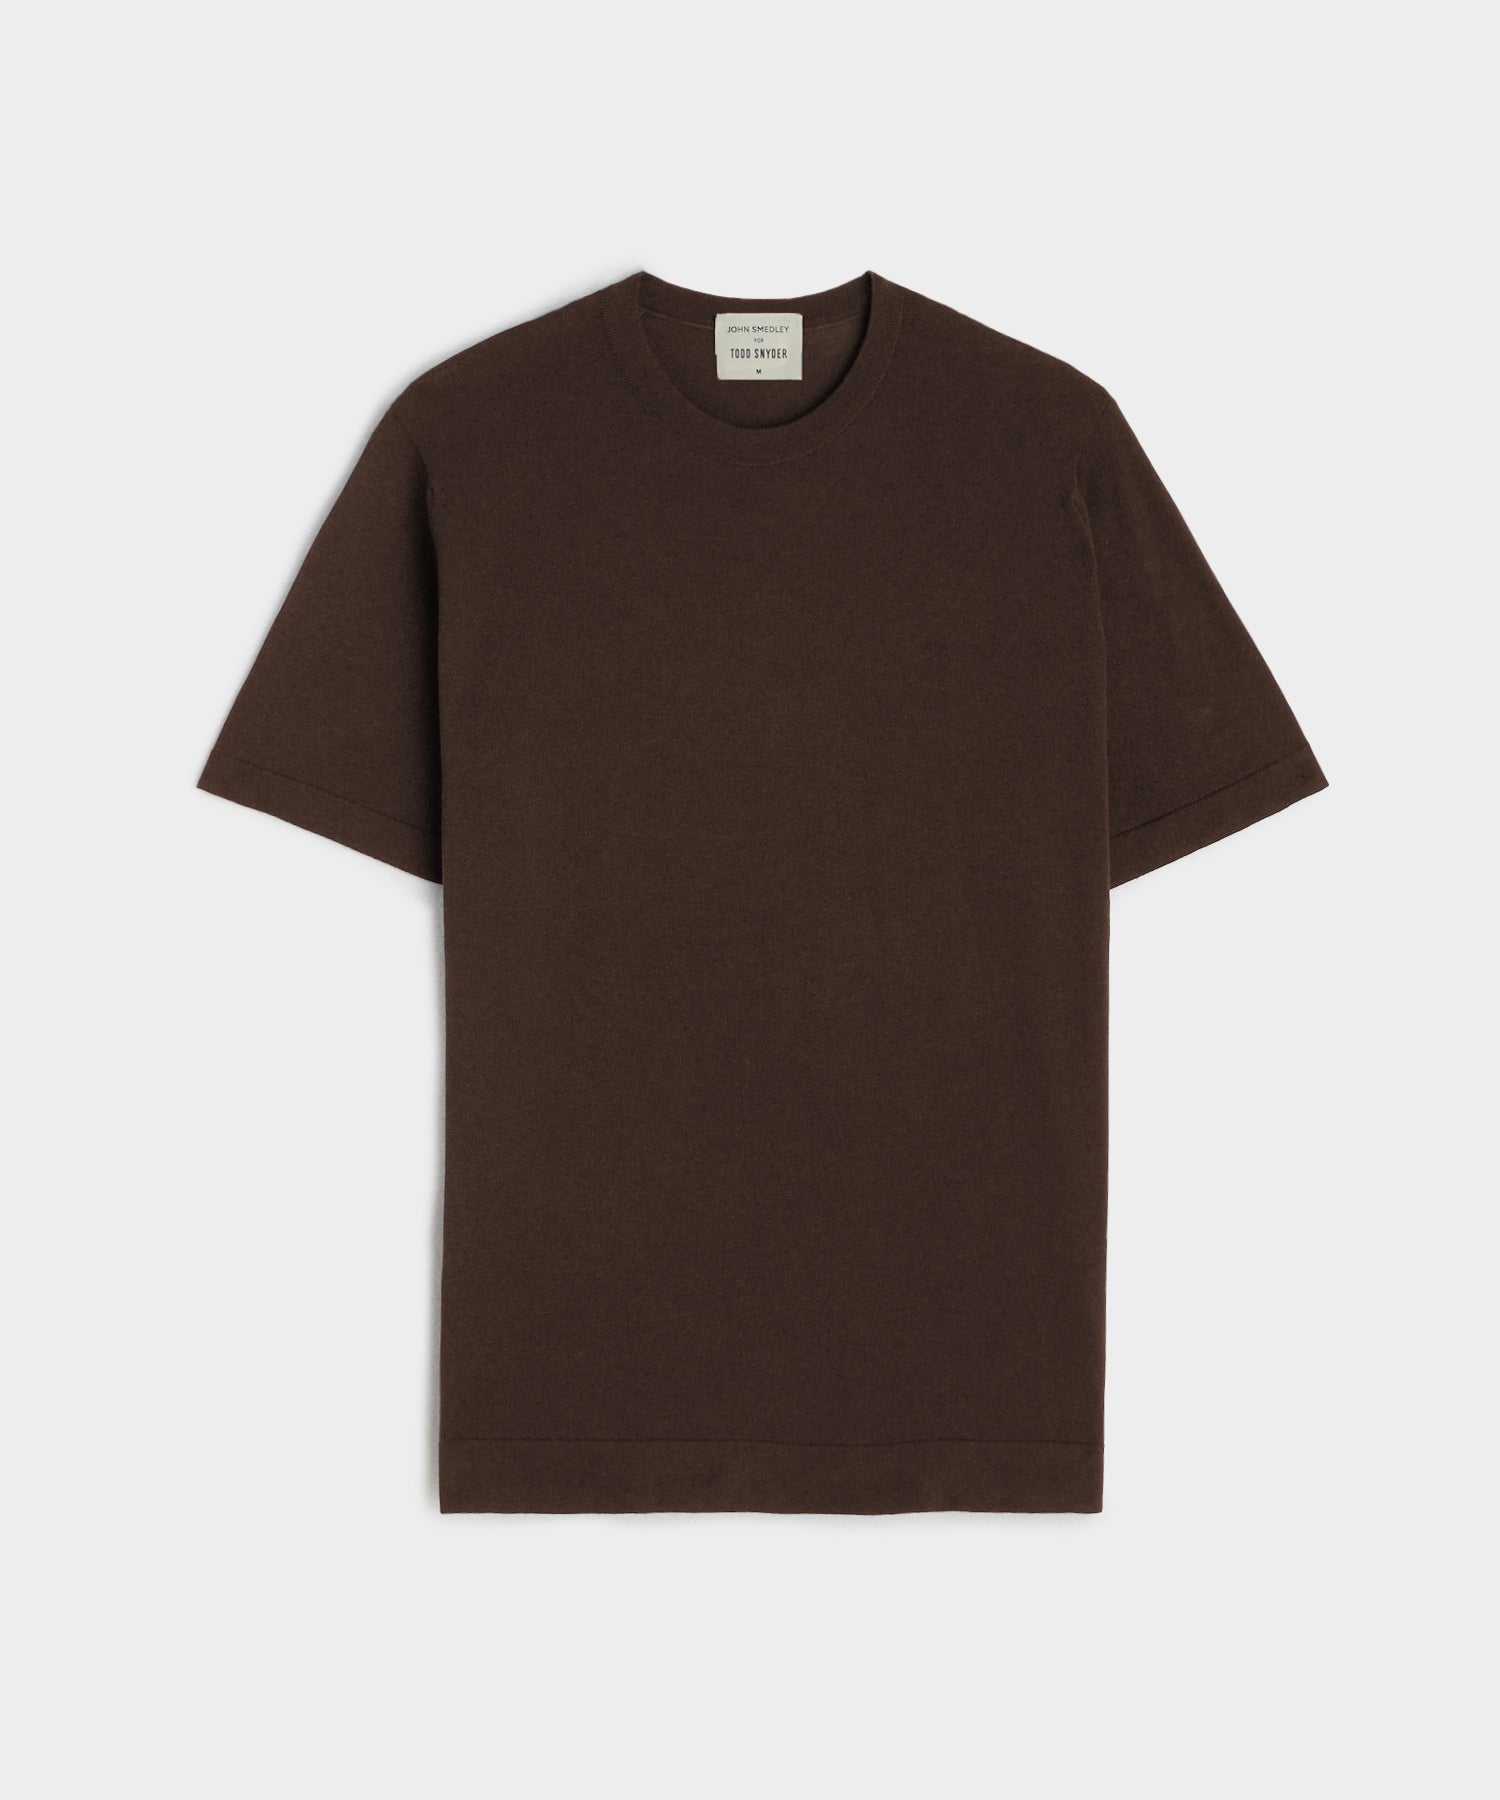 John Smedley x Todd Snyder Lorca Short Sleeve Knit Shirt in Chocolat